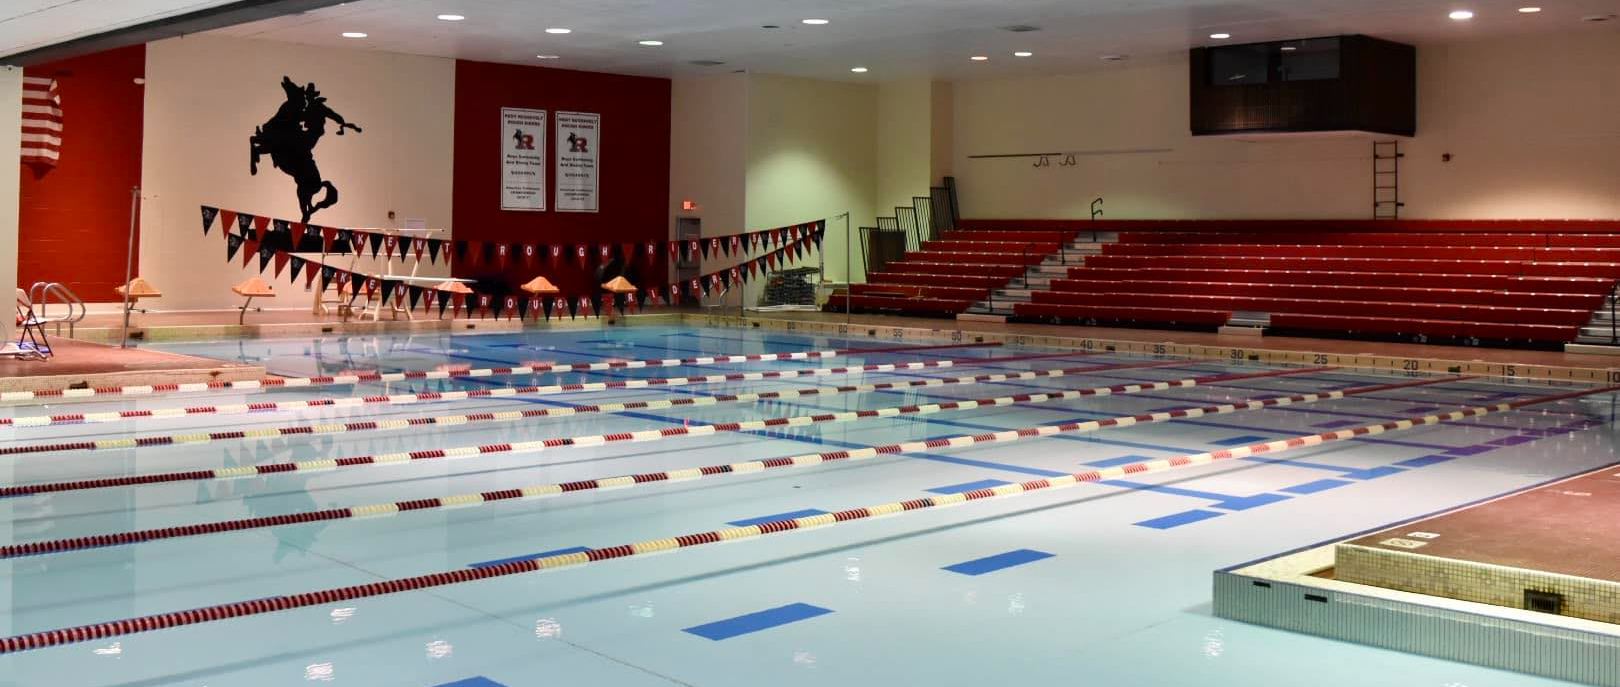 indoor pool with bleachers behind it